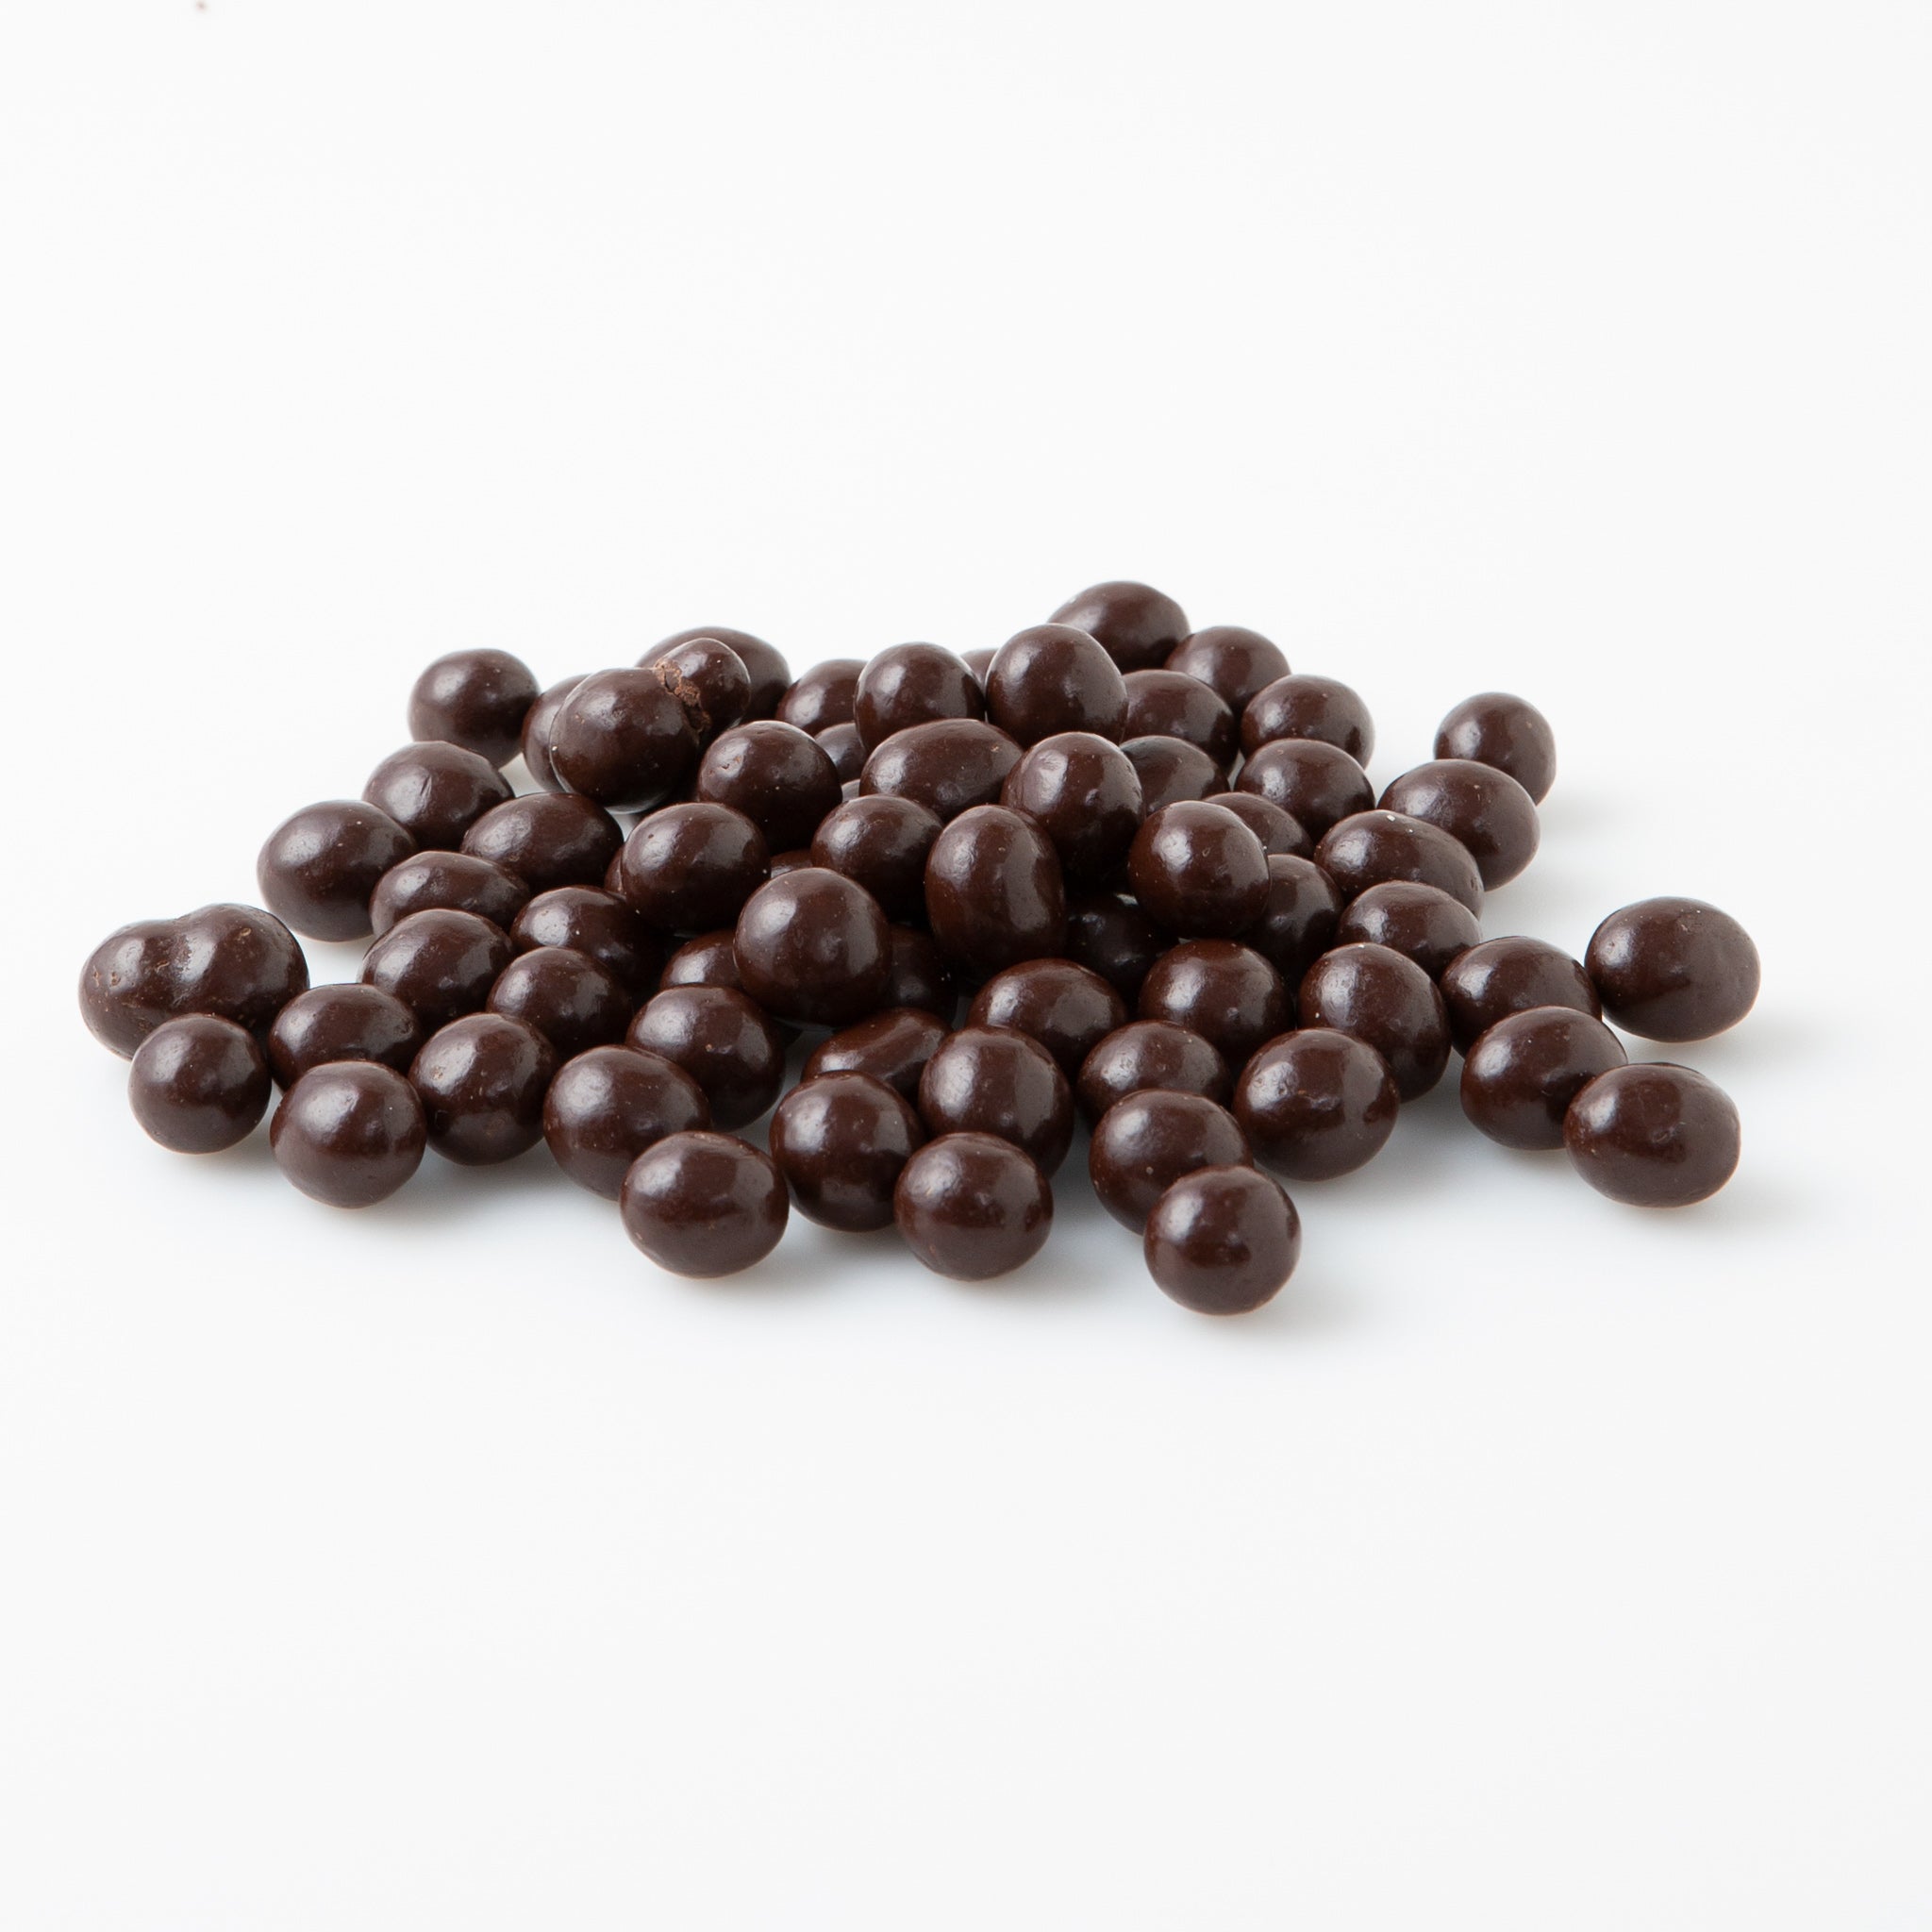 Tasty Dark Chocolate Coffee Beans (Chocolates) Image - Naked Foods